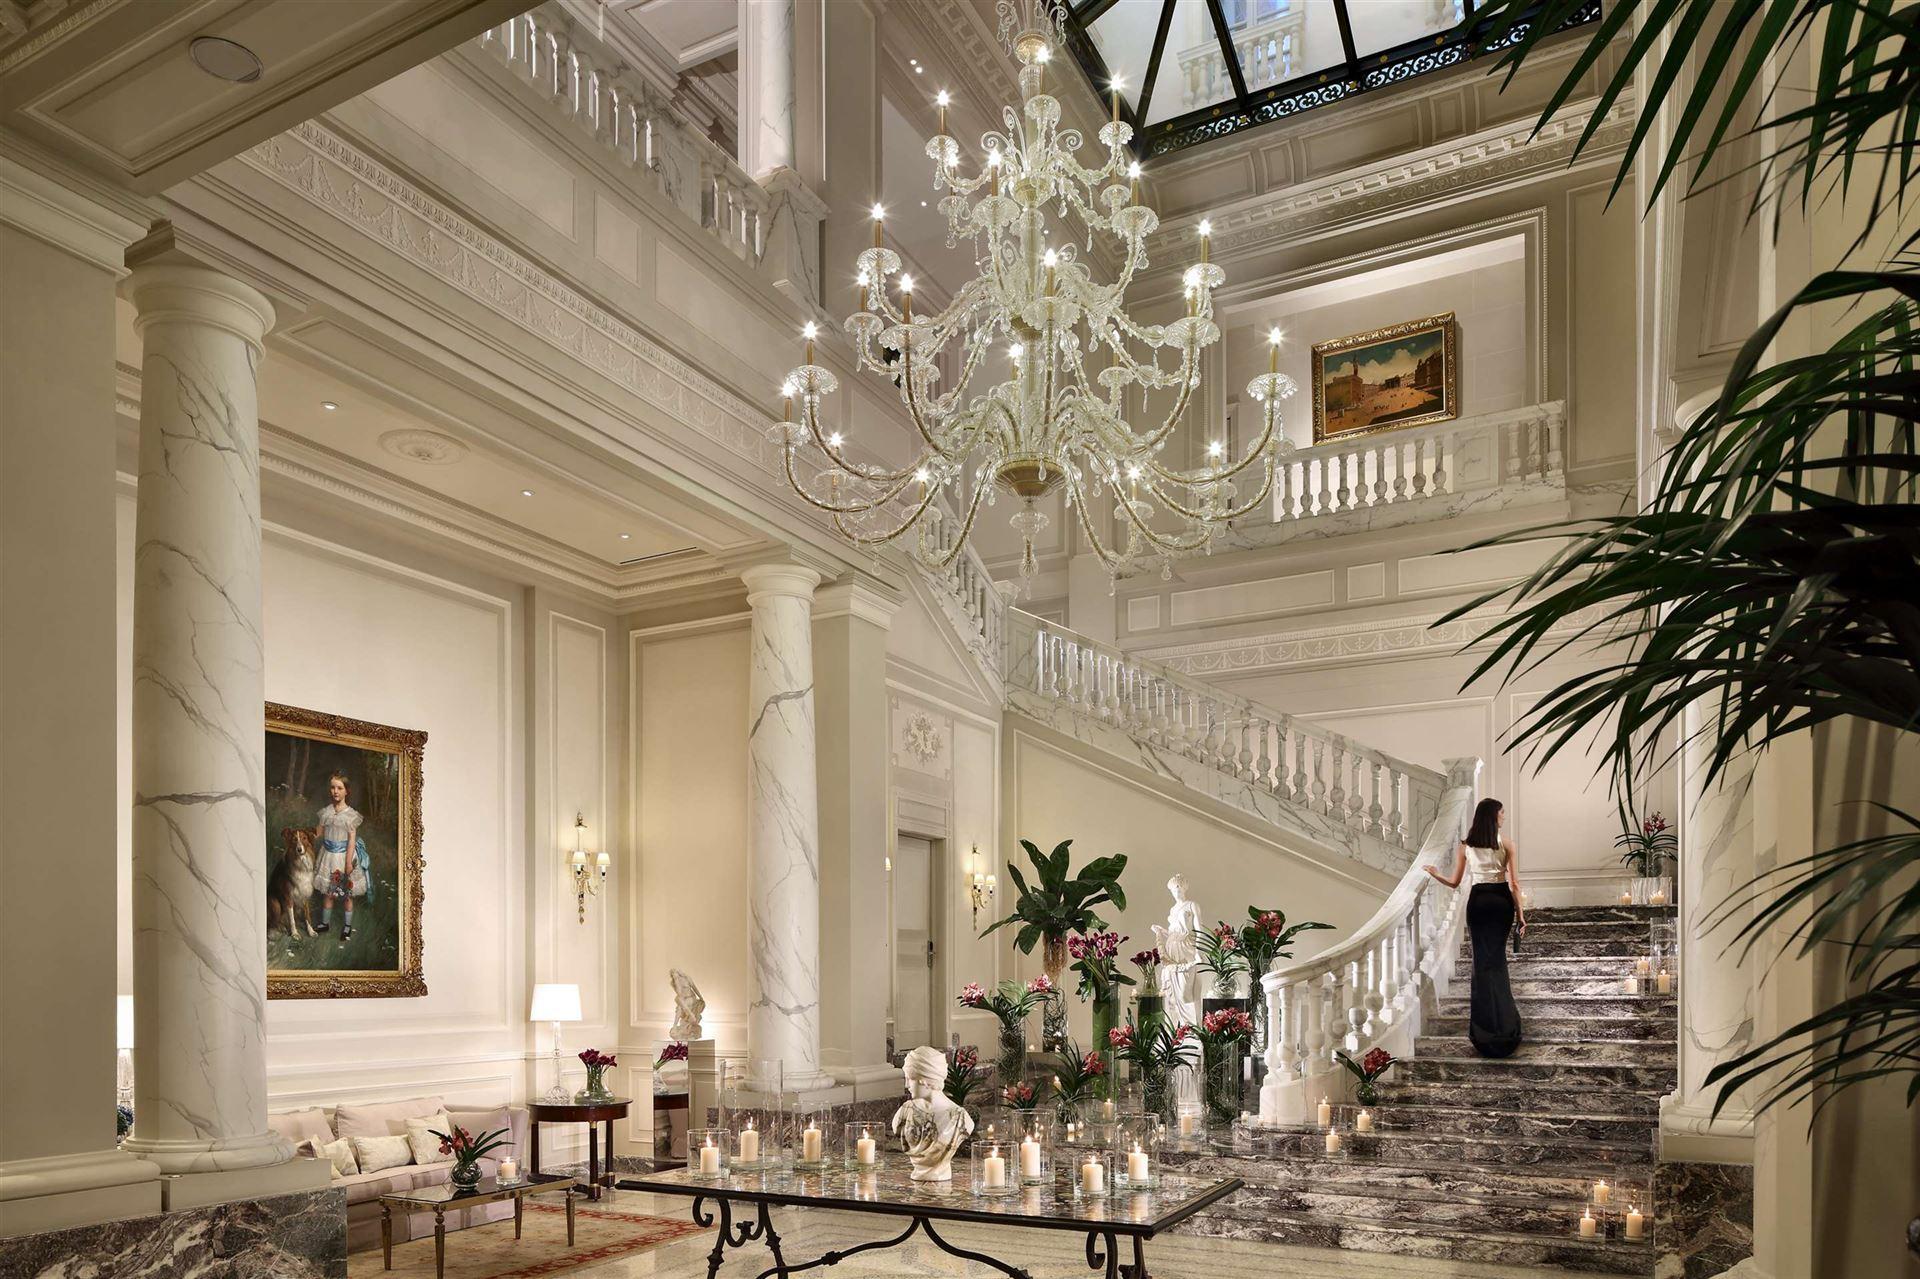 Palazzo Parigi Hotel & Grand SPA Milan luxe hotel deals